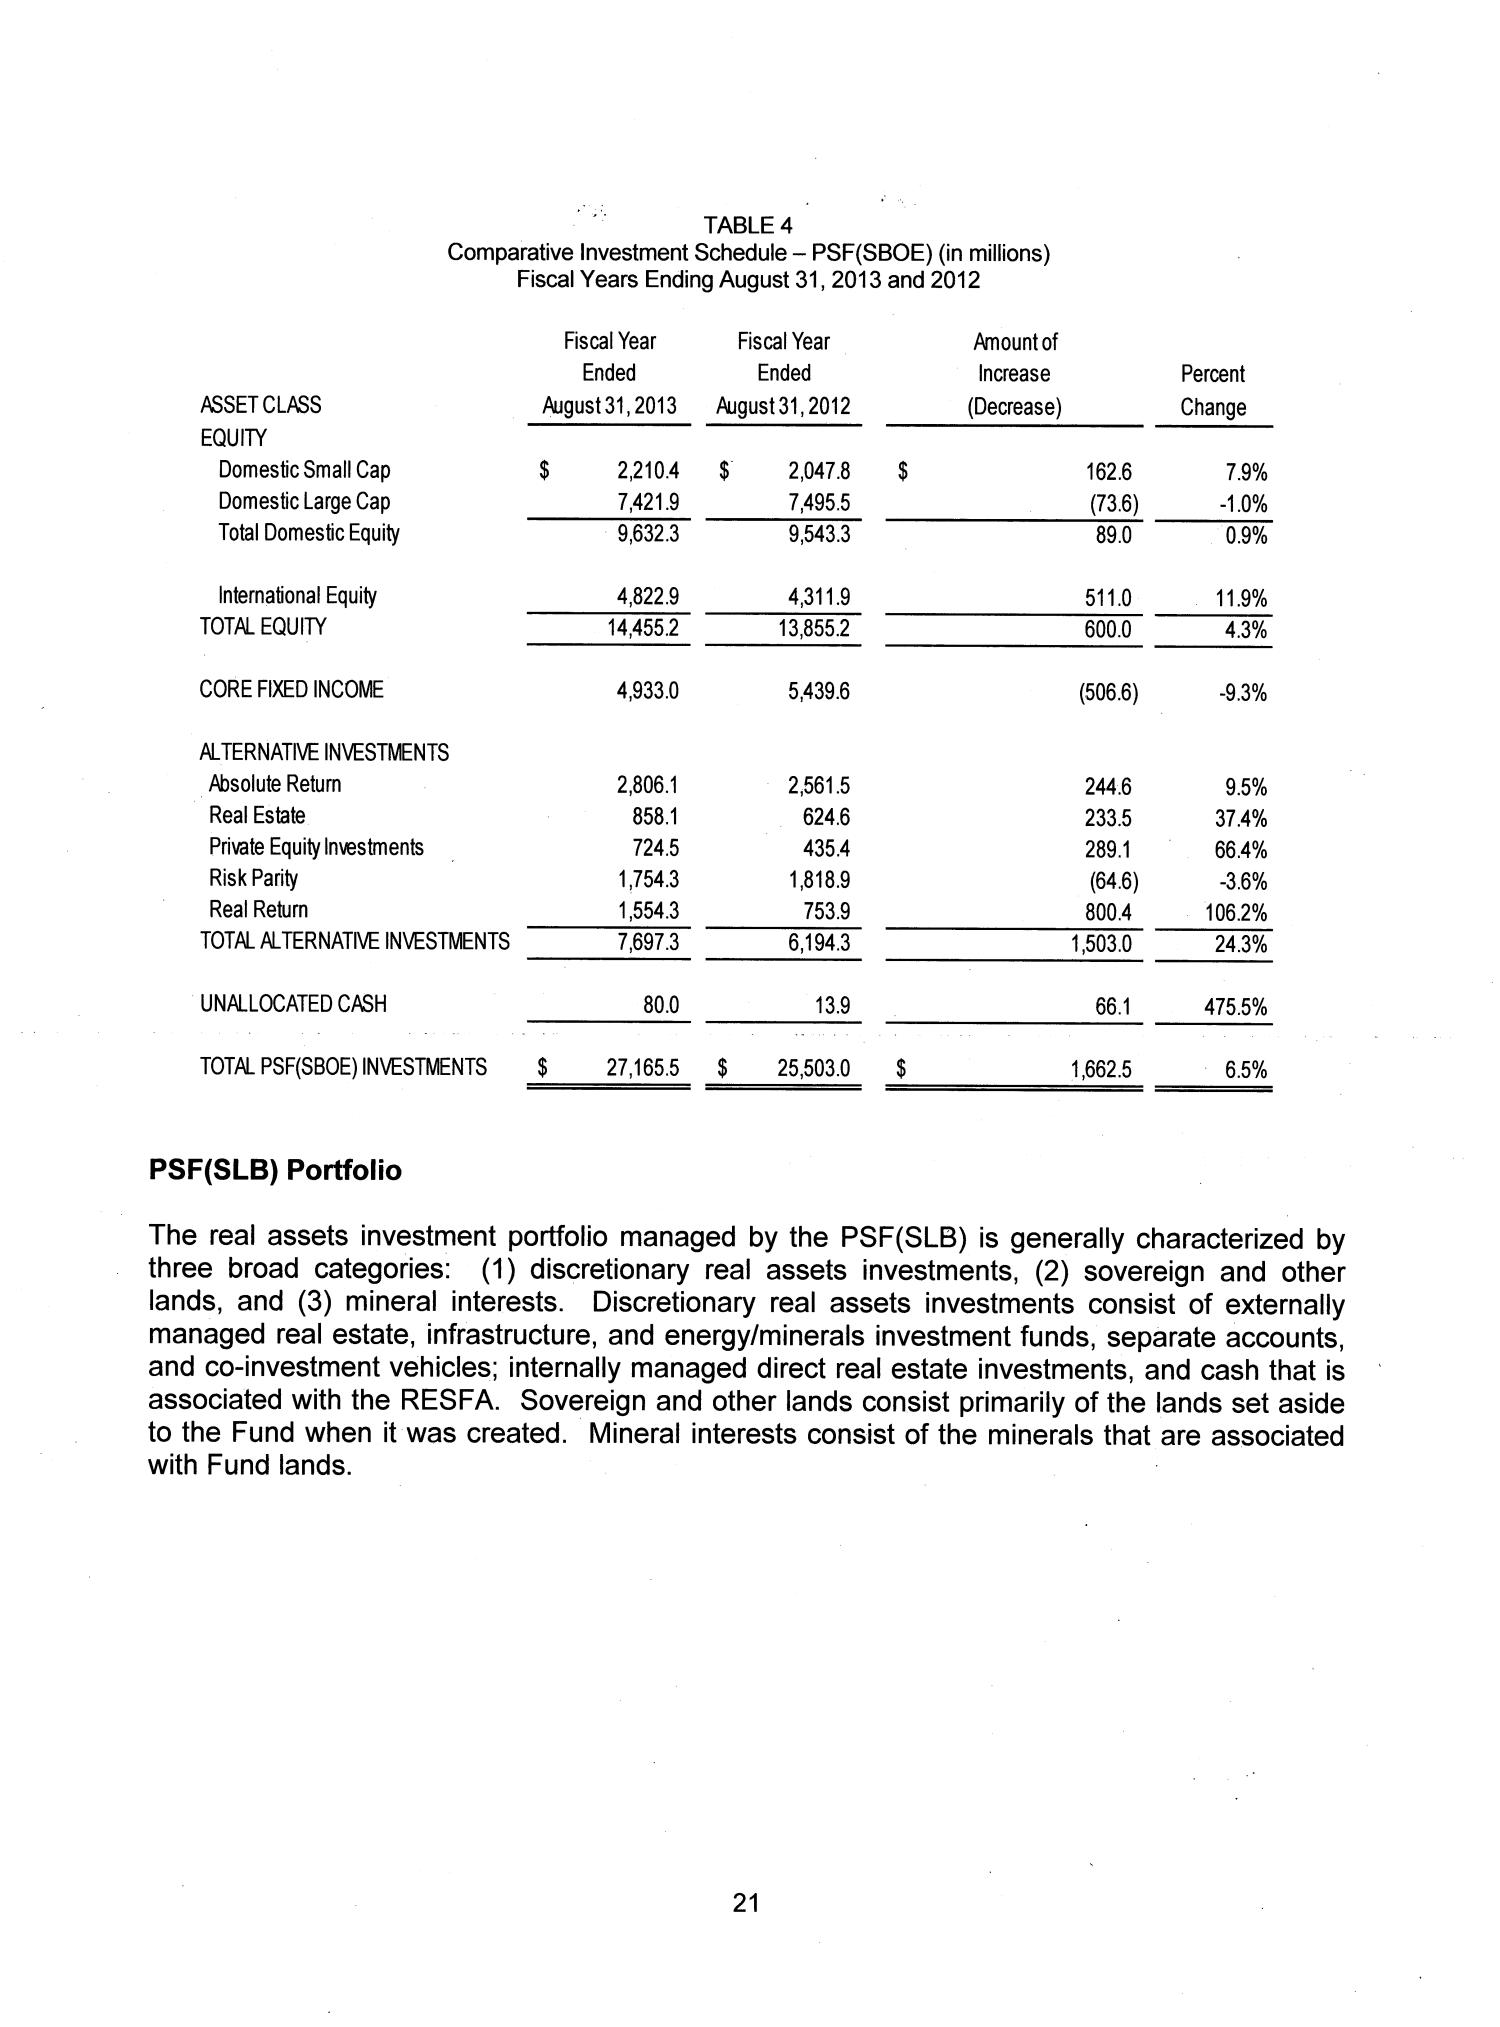 Texas Permanent School Fund Annual Financial Report: 2013
                                                
                                                    21
                                                